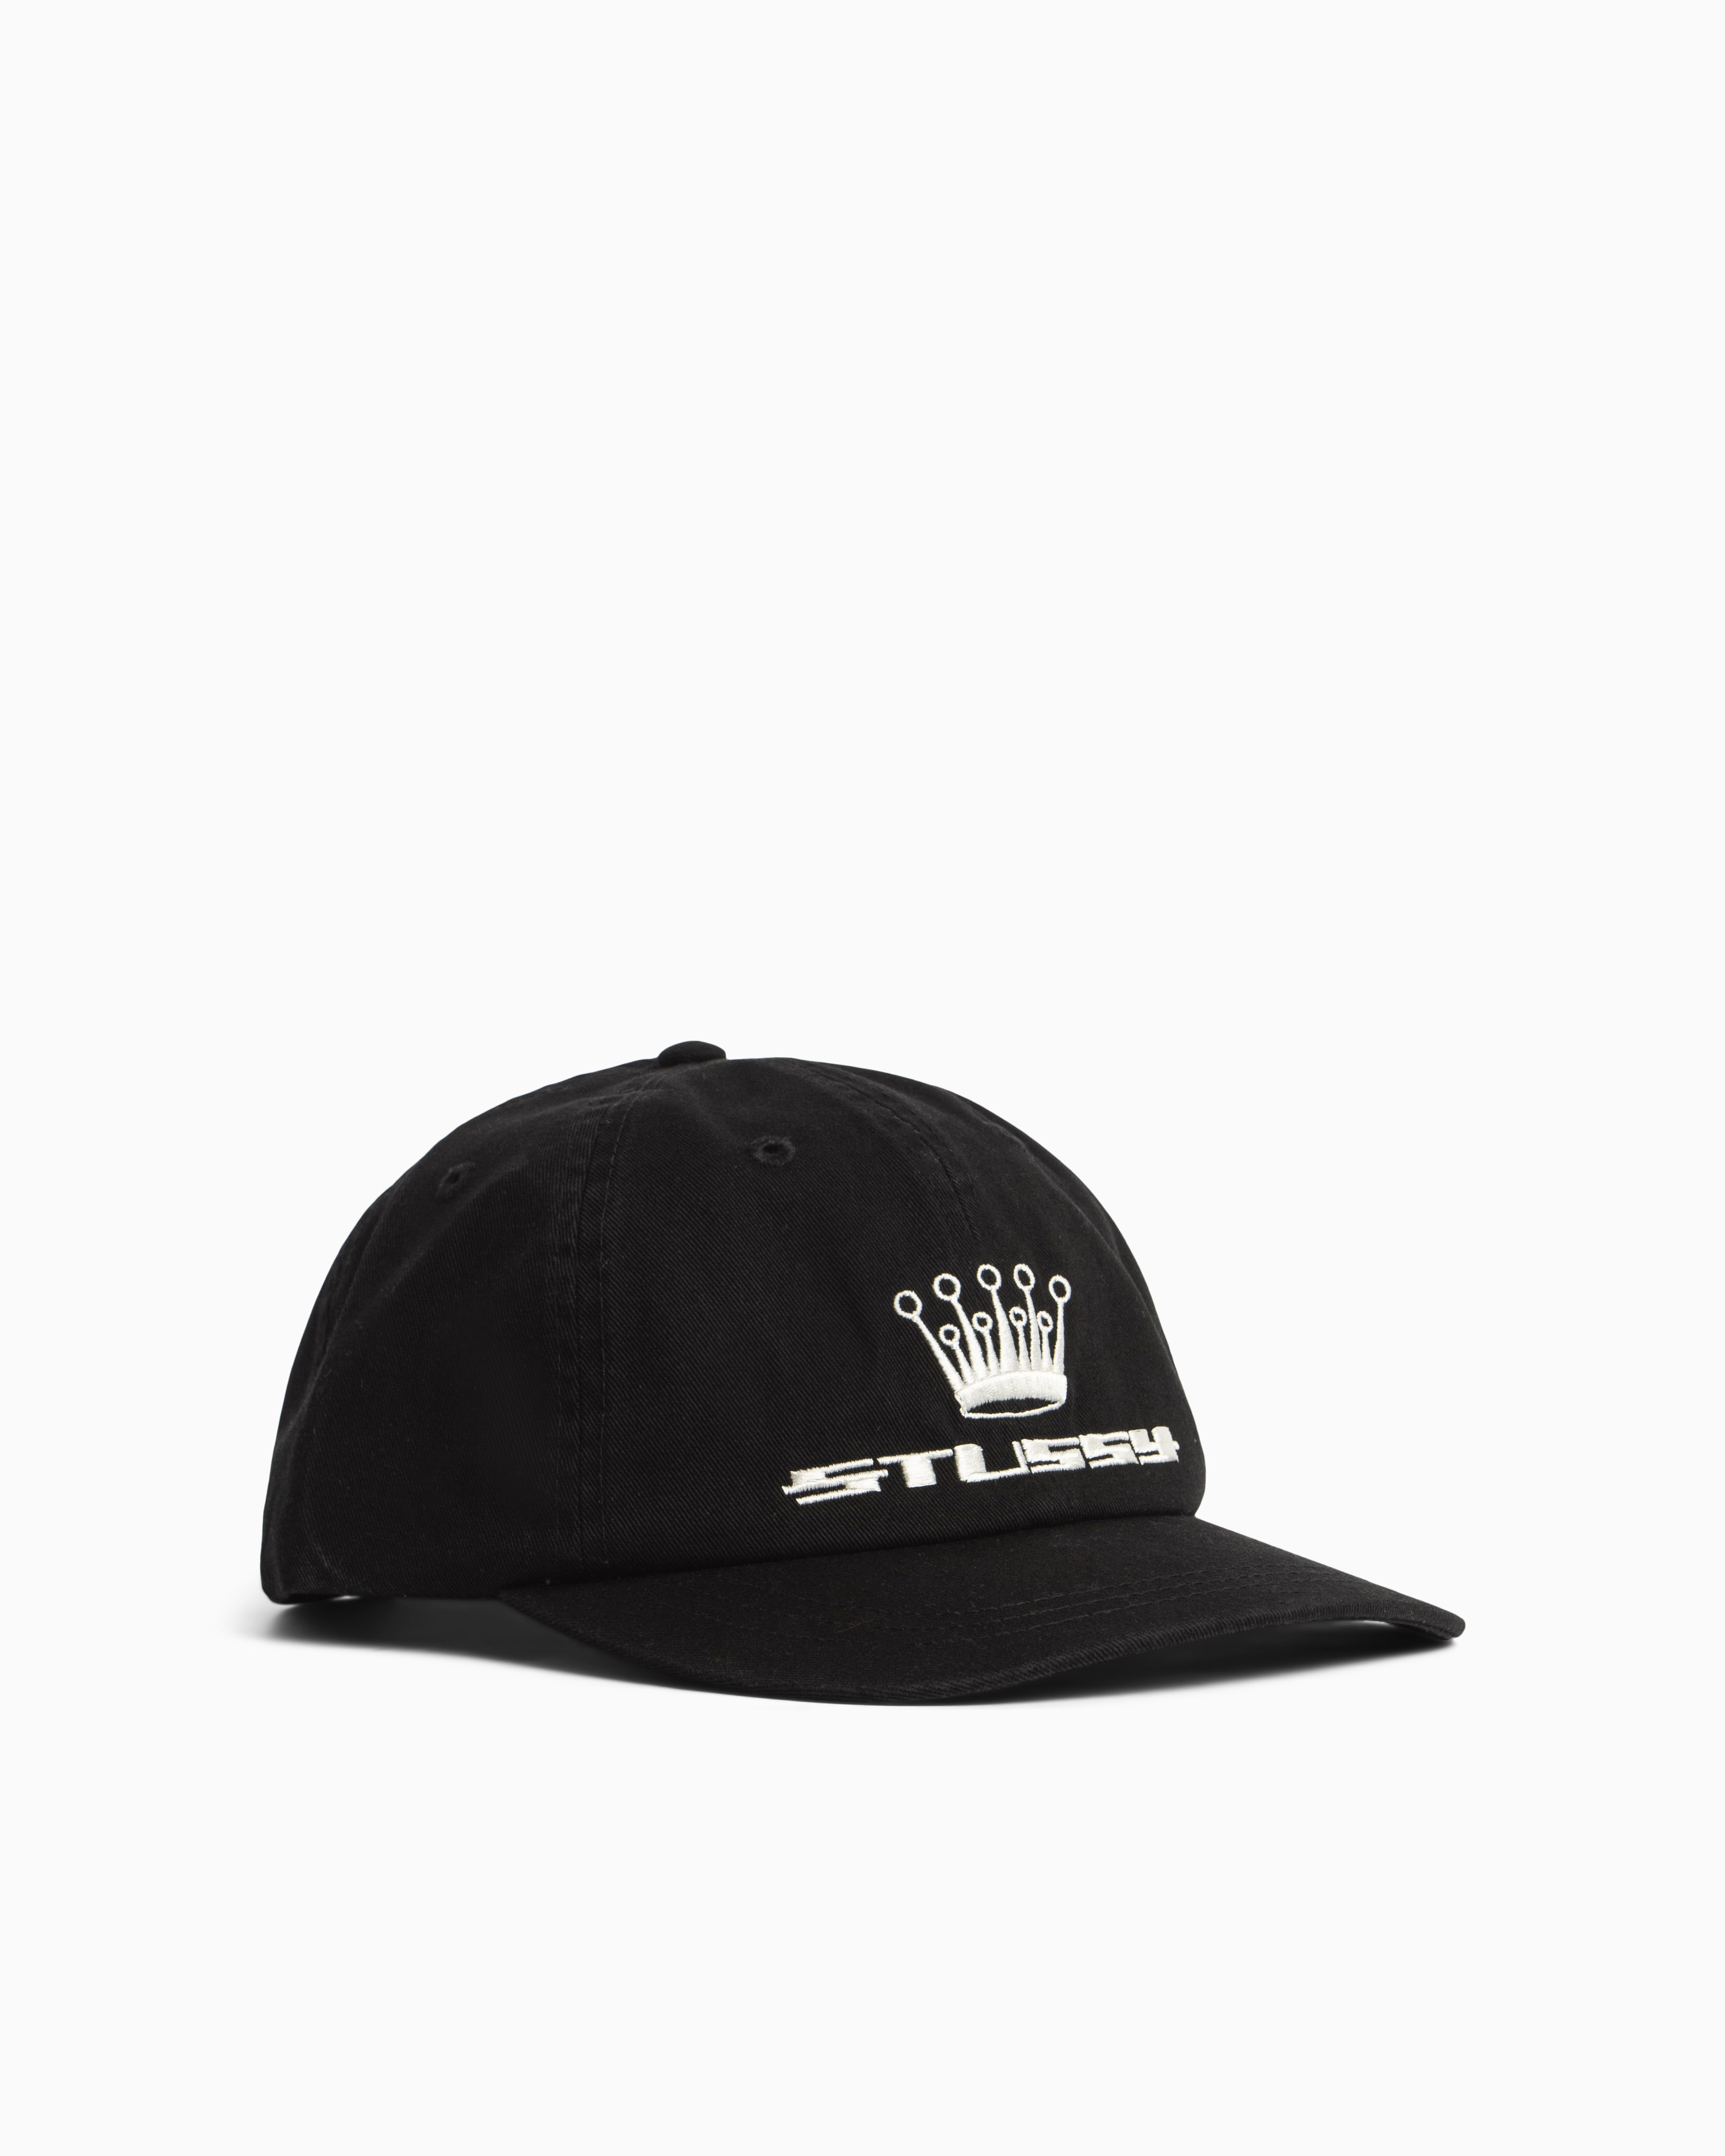 93 Slick Crown Low Pro Cap Stussy Headwear Caps Black